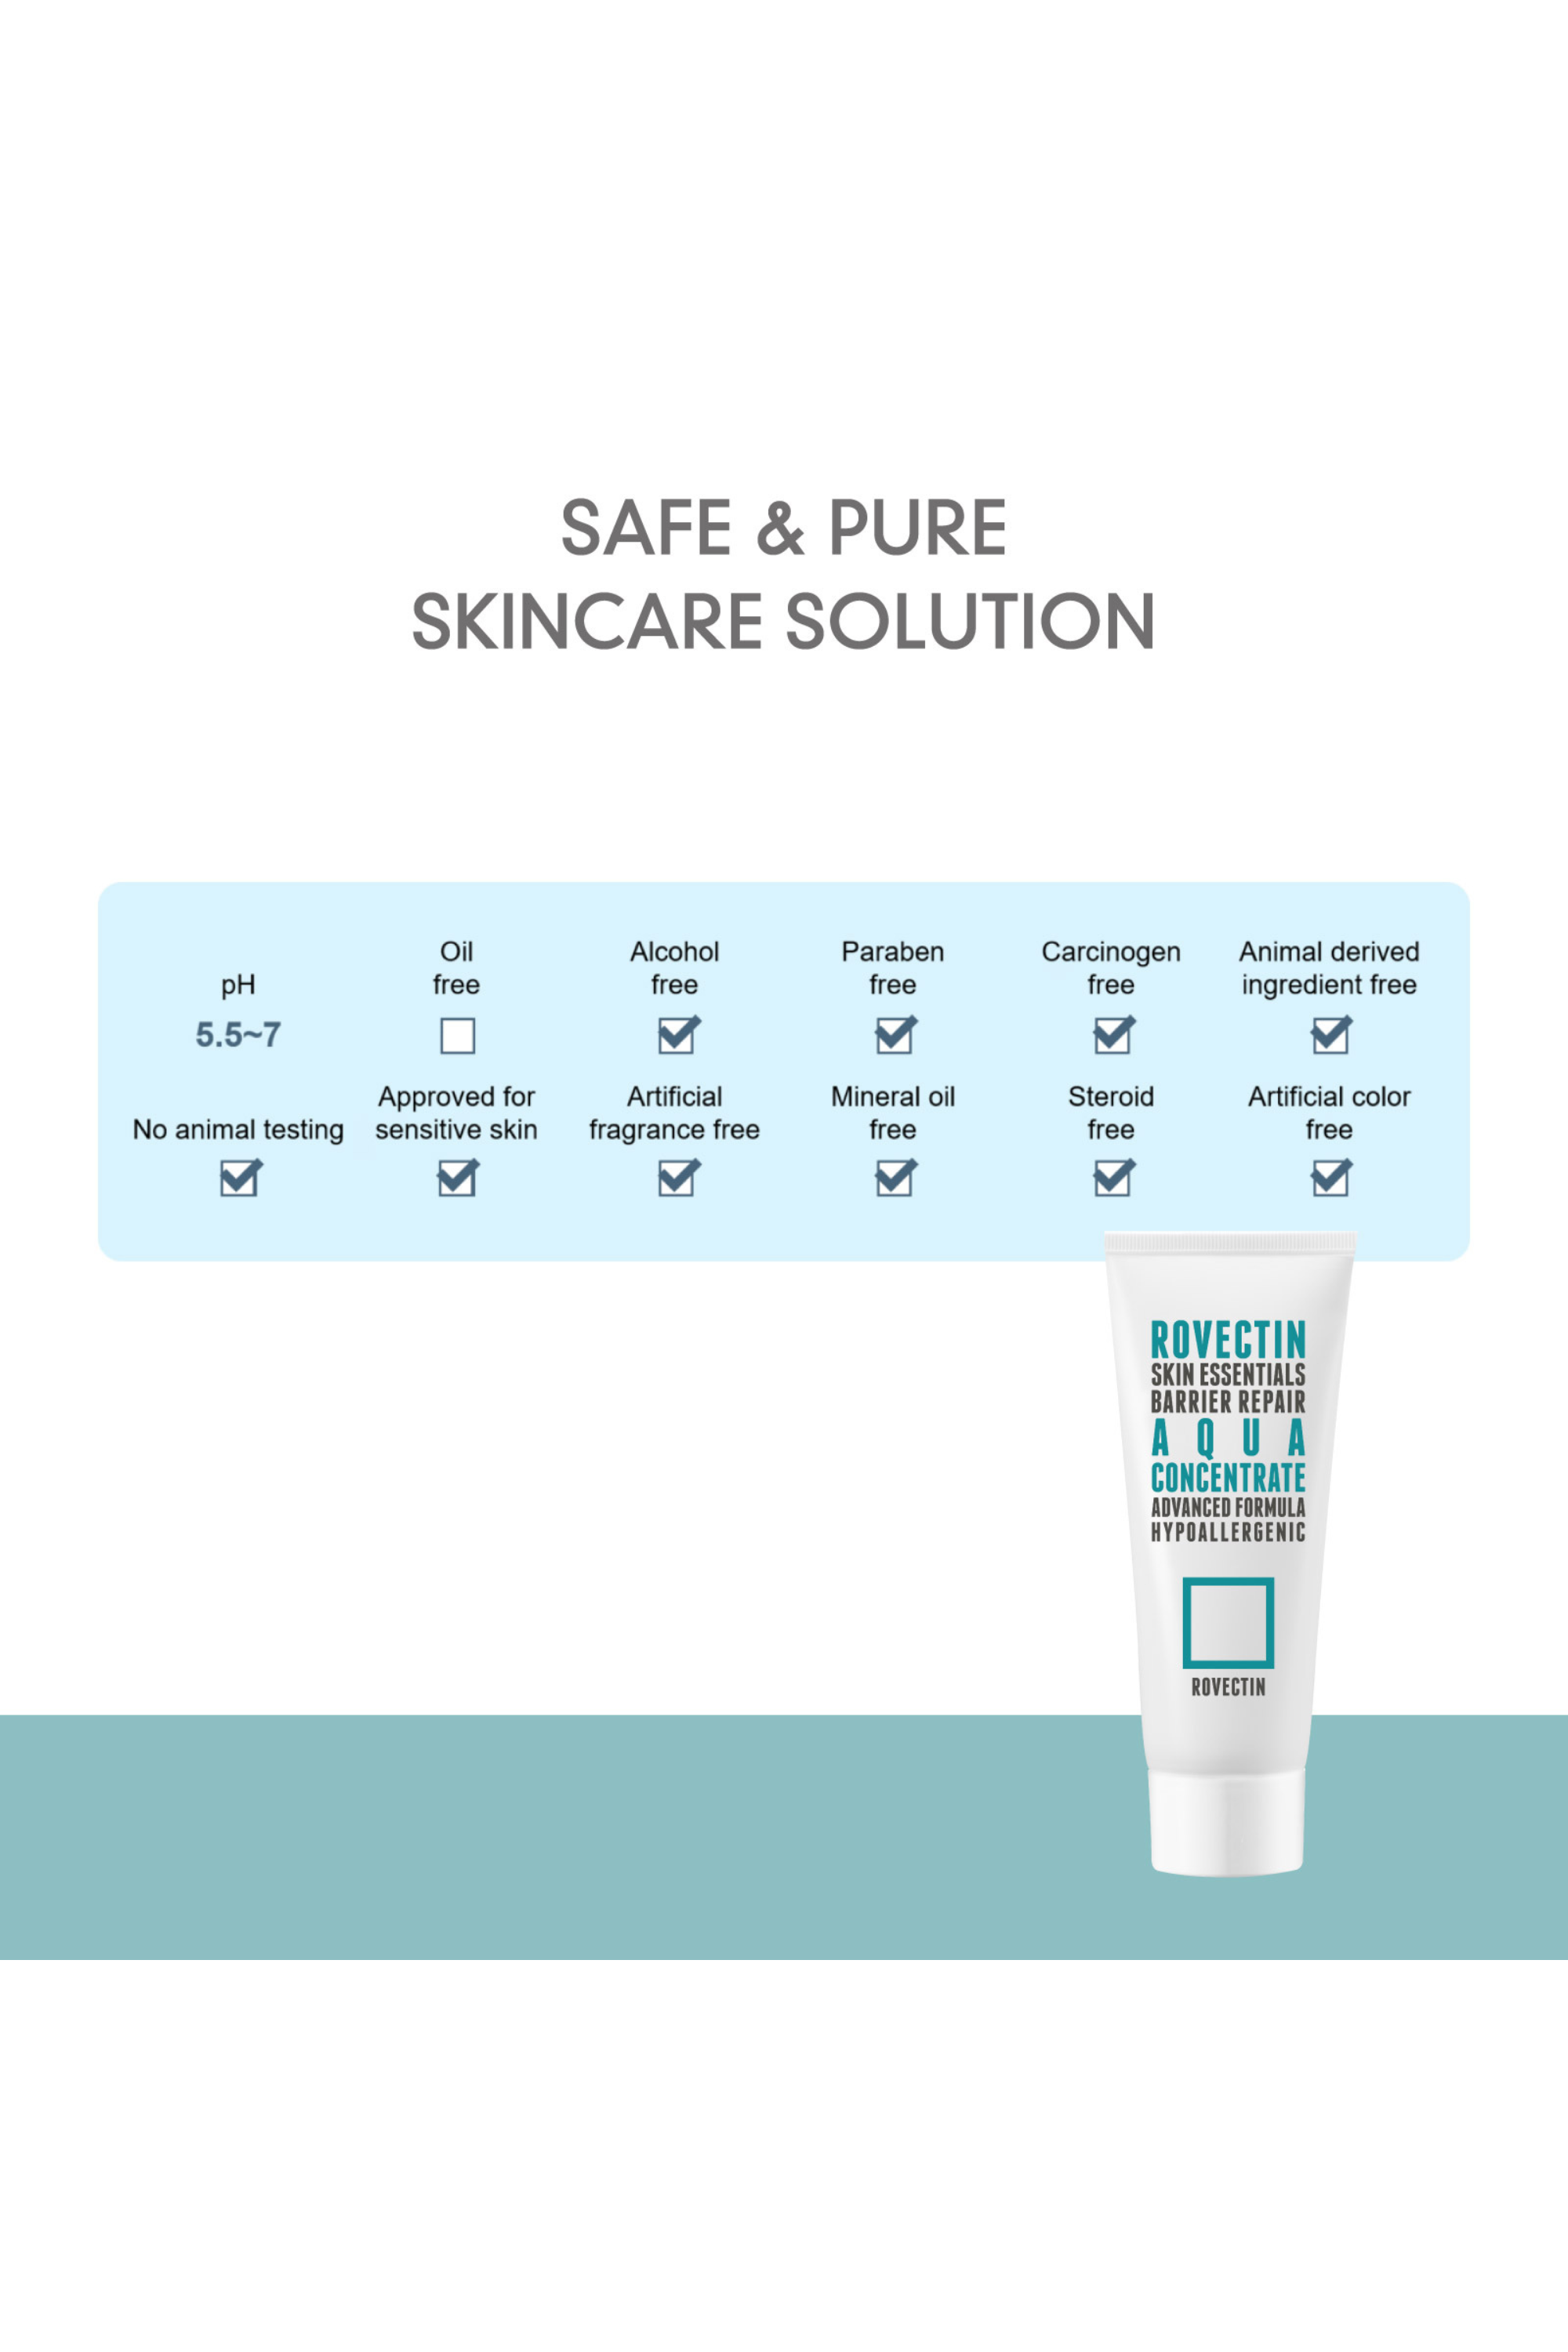 Aqua Concentrate Face Moisturizer - Rovectin Skin Essentials